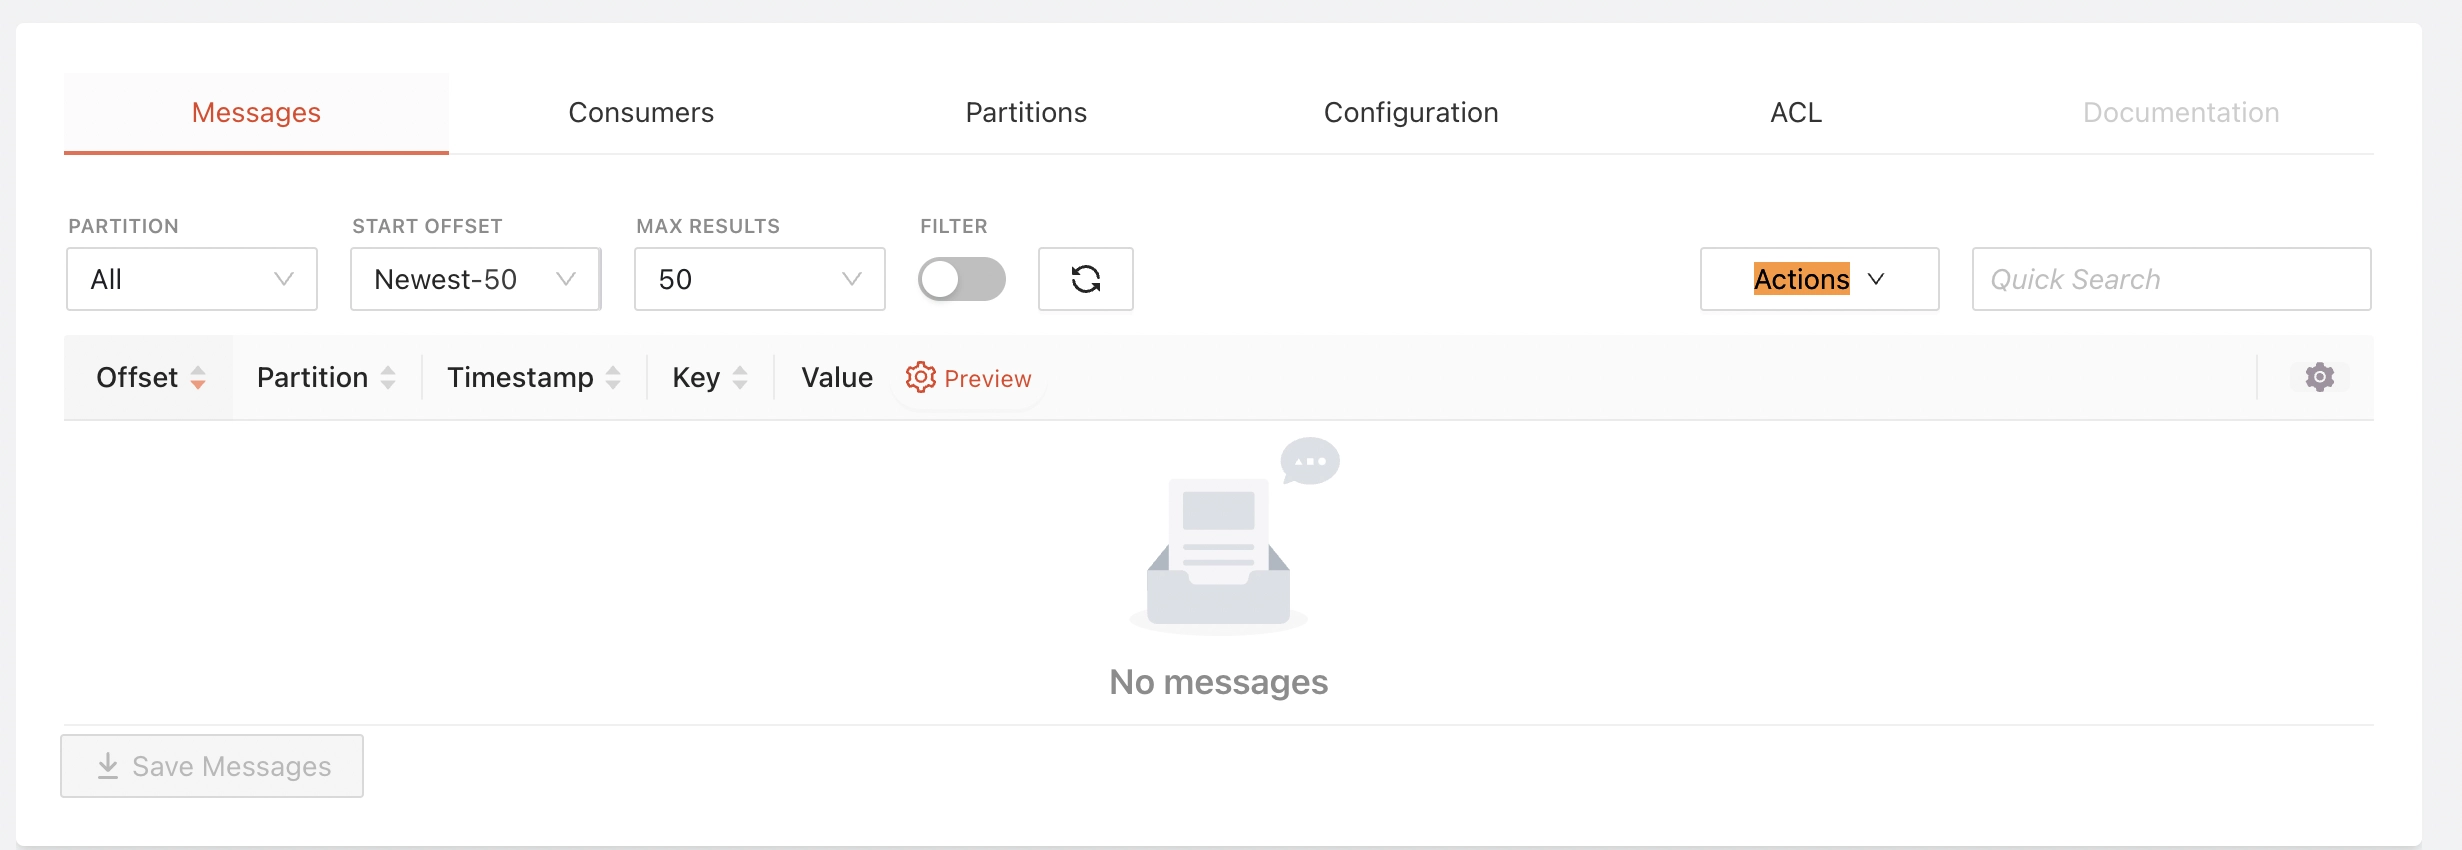 Screenshot of the Redpanda UI highlighting the Actions button